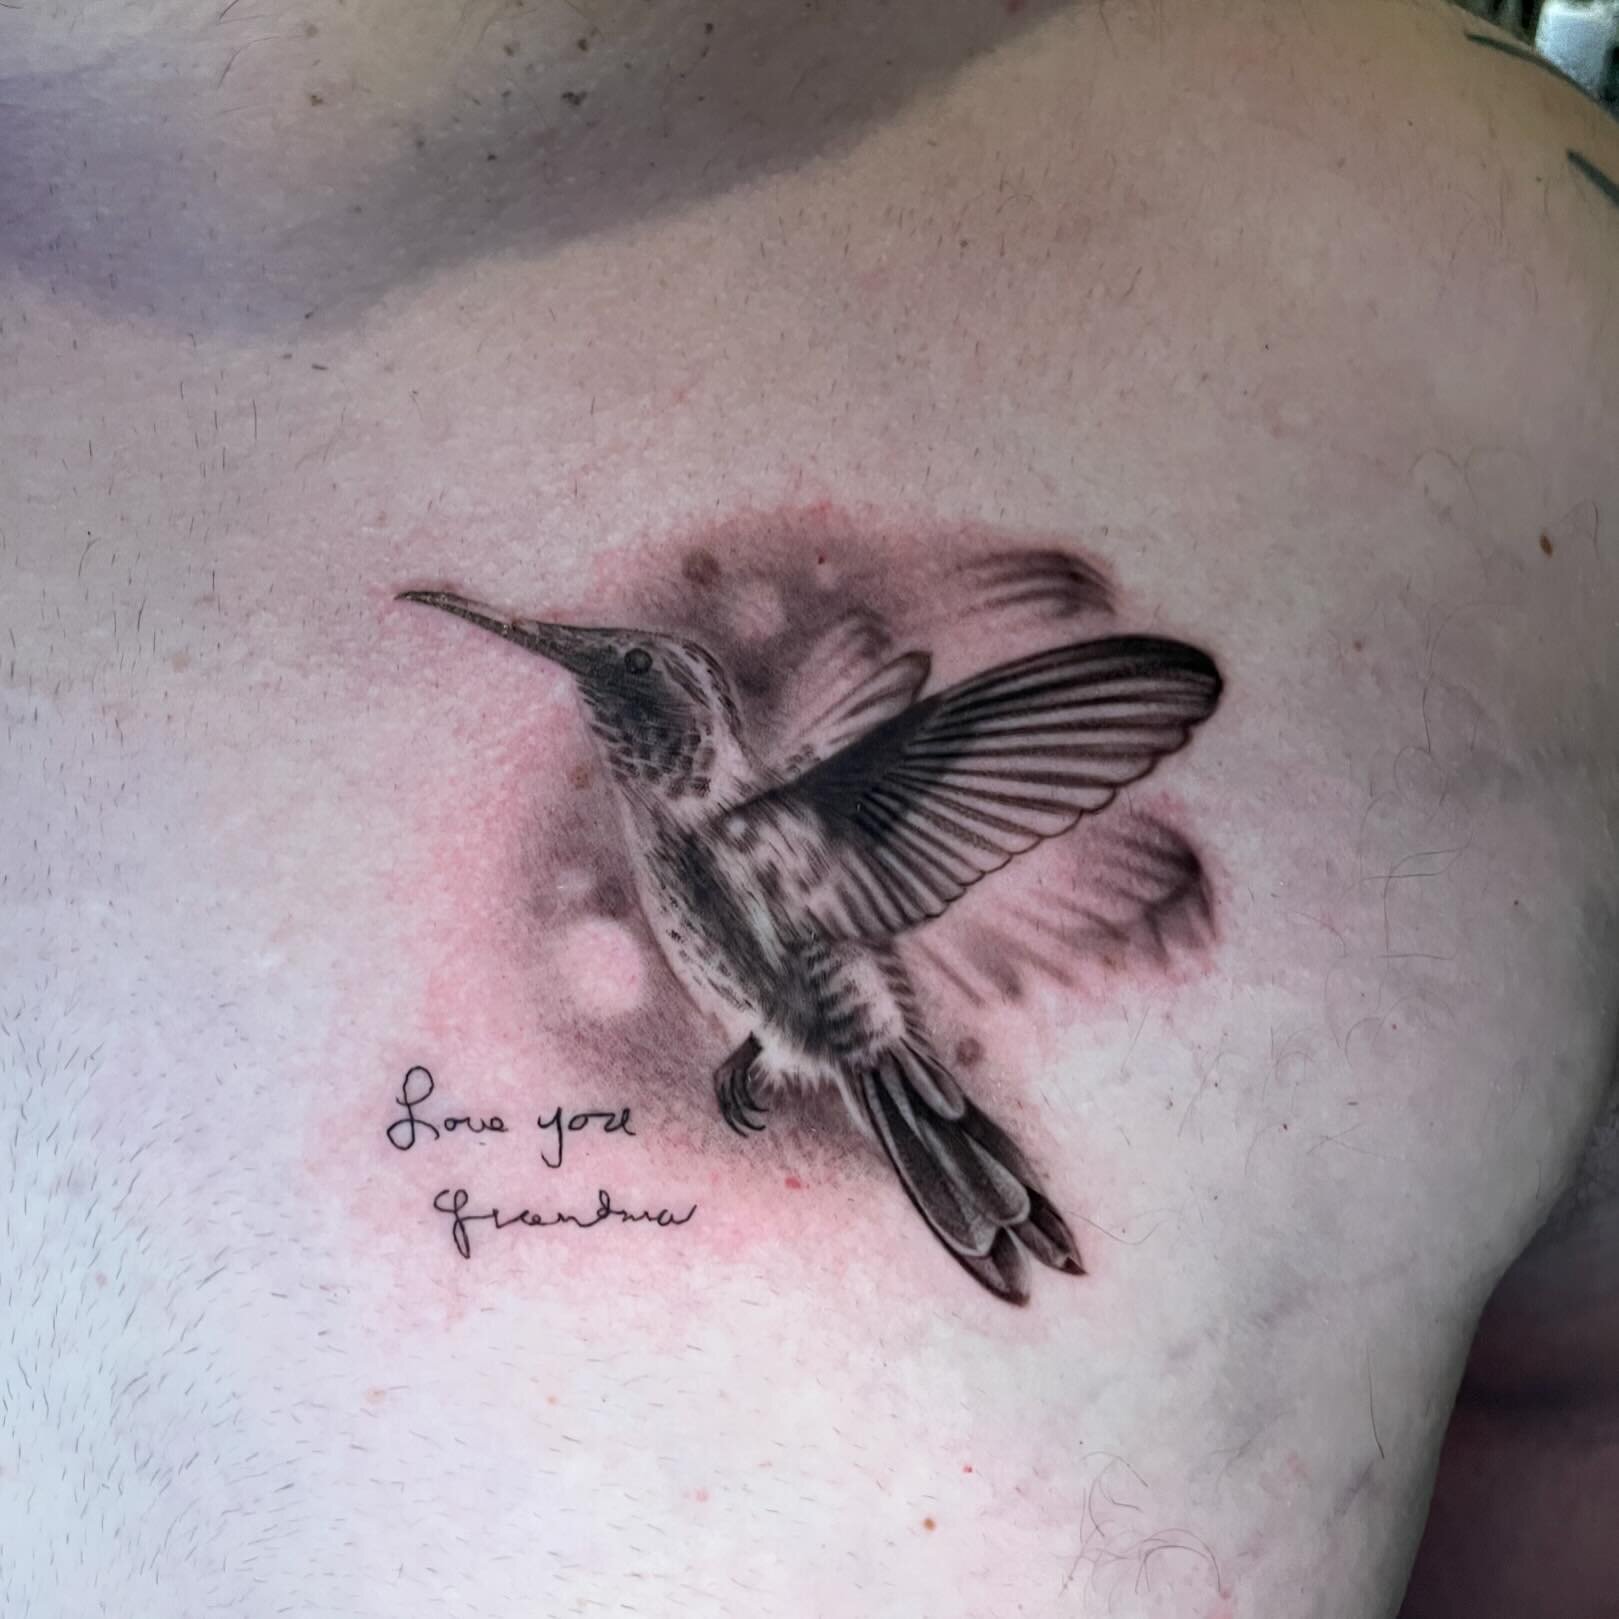 @malditonacho honoring a beautiful soul with this humming bird tattoo.

#hummingbird #hummingbirdtattoo #realistictattoo #inlovingmemory #memorialtattoo #finelinetattoo #losangelestattoo #tattoola #latattooshop #losangelestattooshop #sfvalley #explor